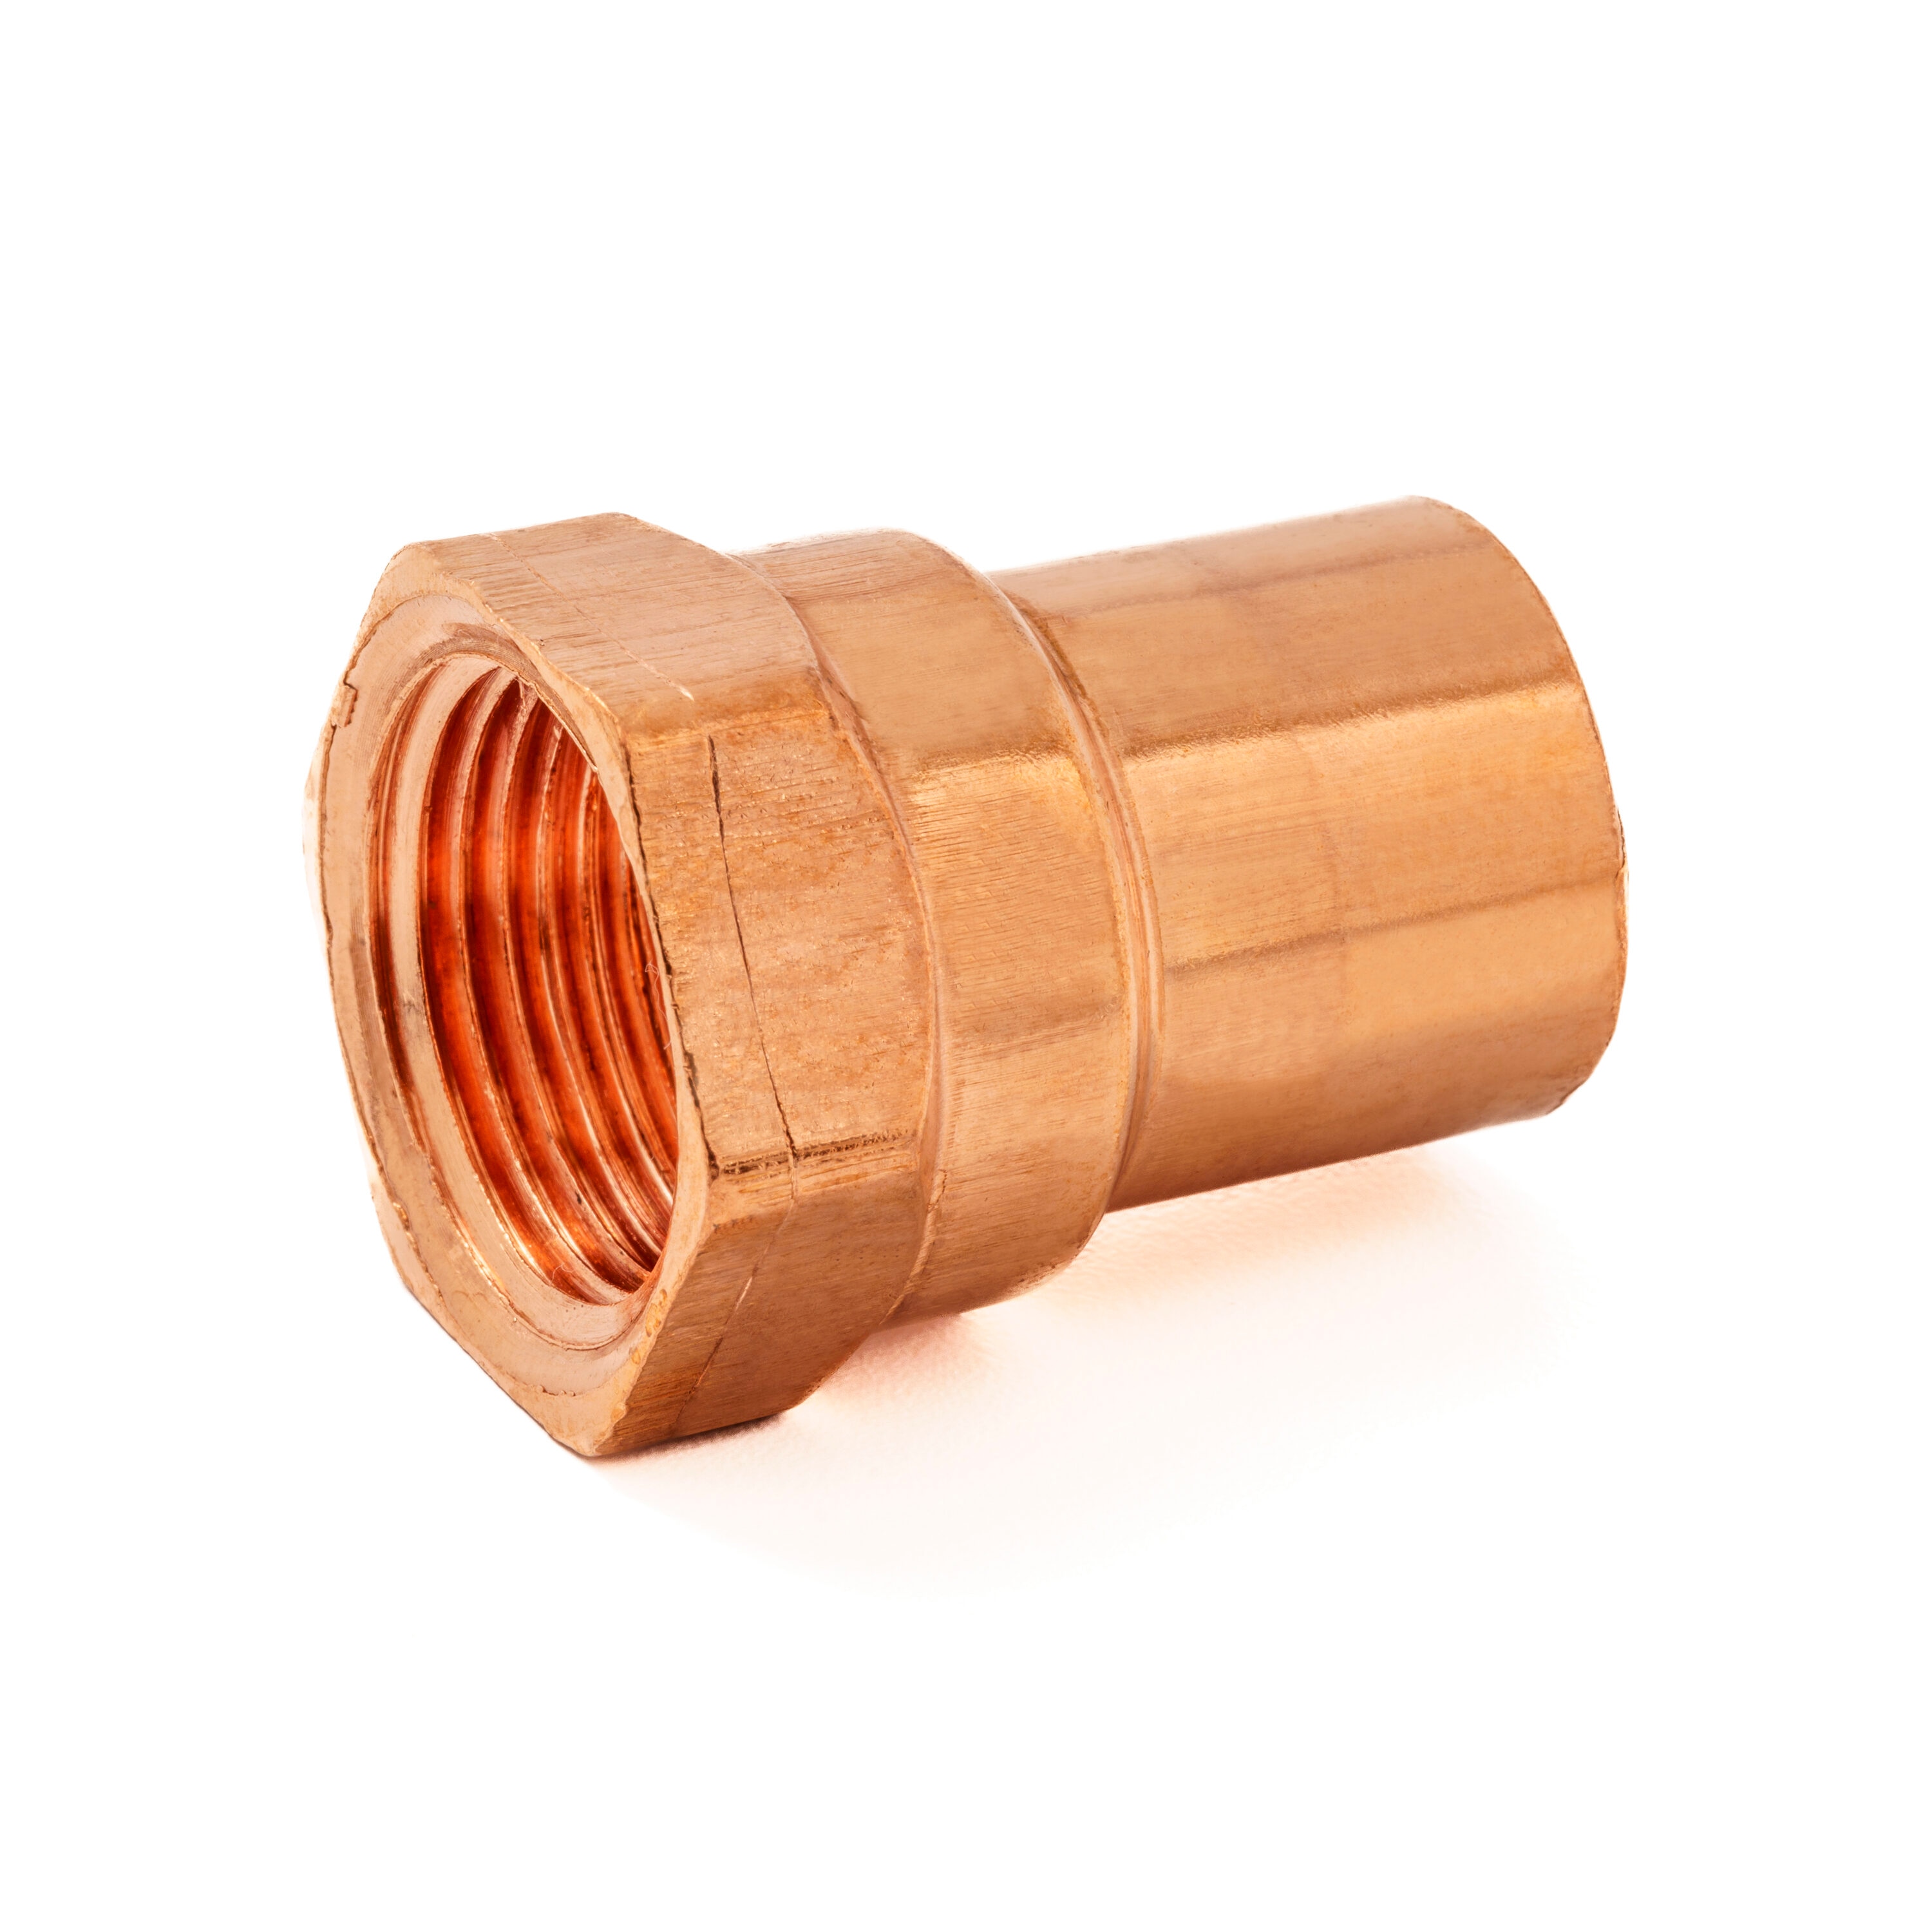 Aqua-Dynamic Fitting Copper Coupling 1 Inch Copper To Copper